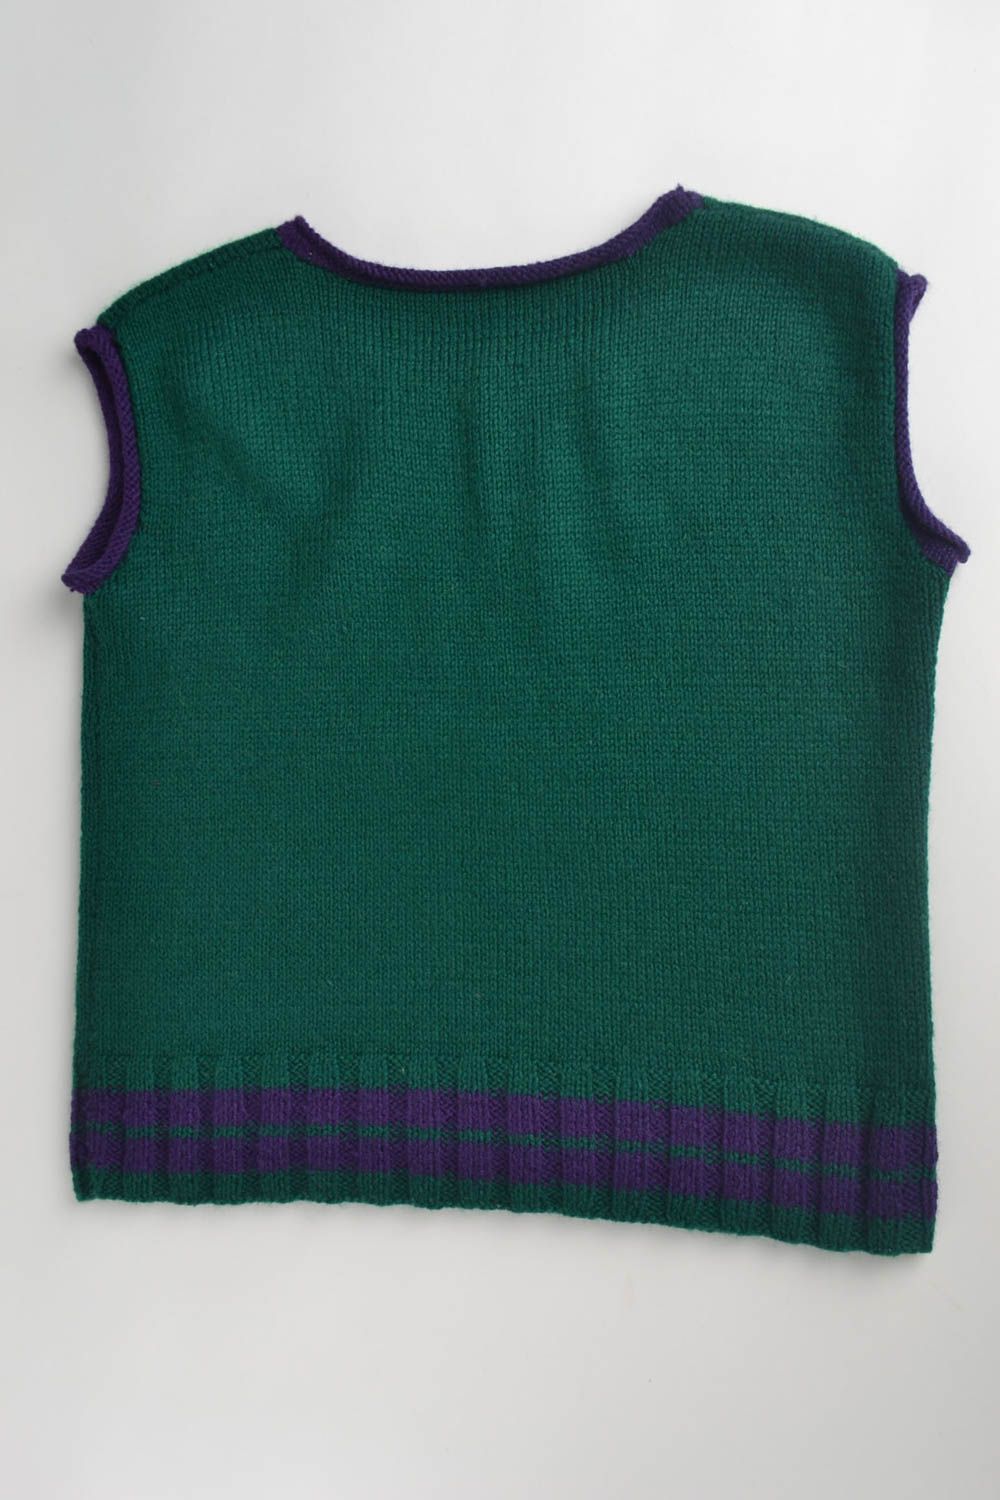 Chaleco tejido a crochet artesanal verde ropa para mujer regalo original foto 3